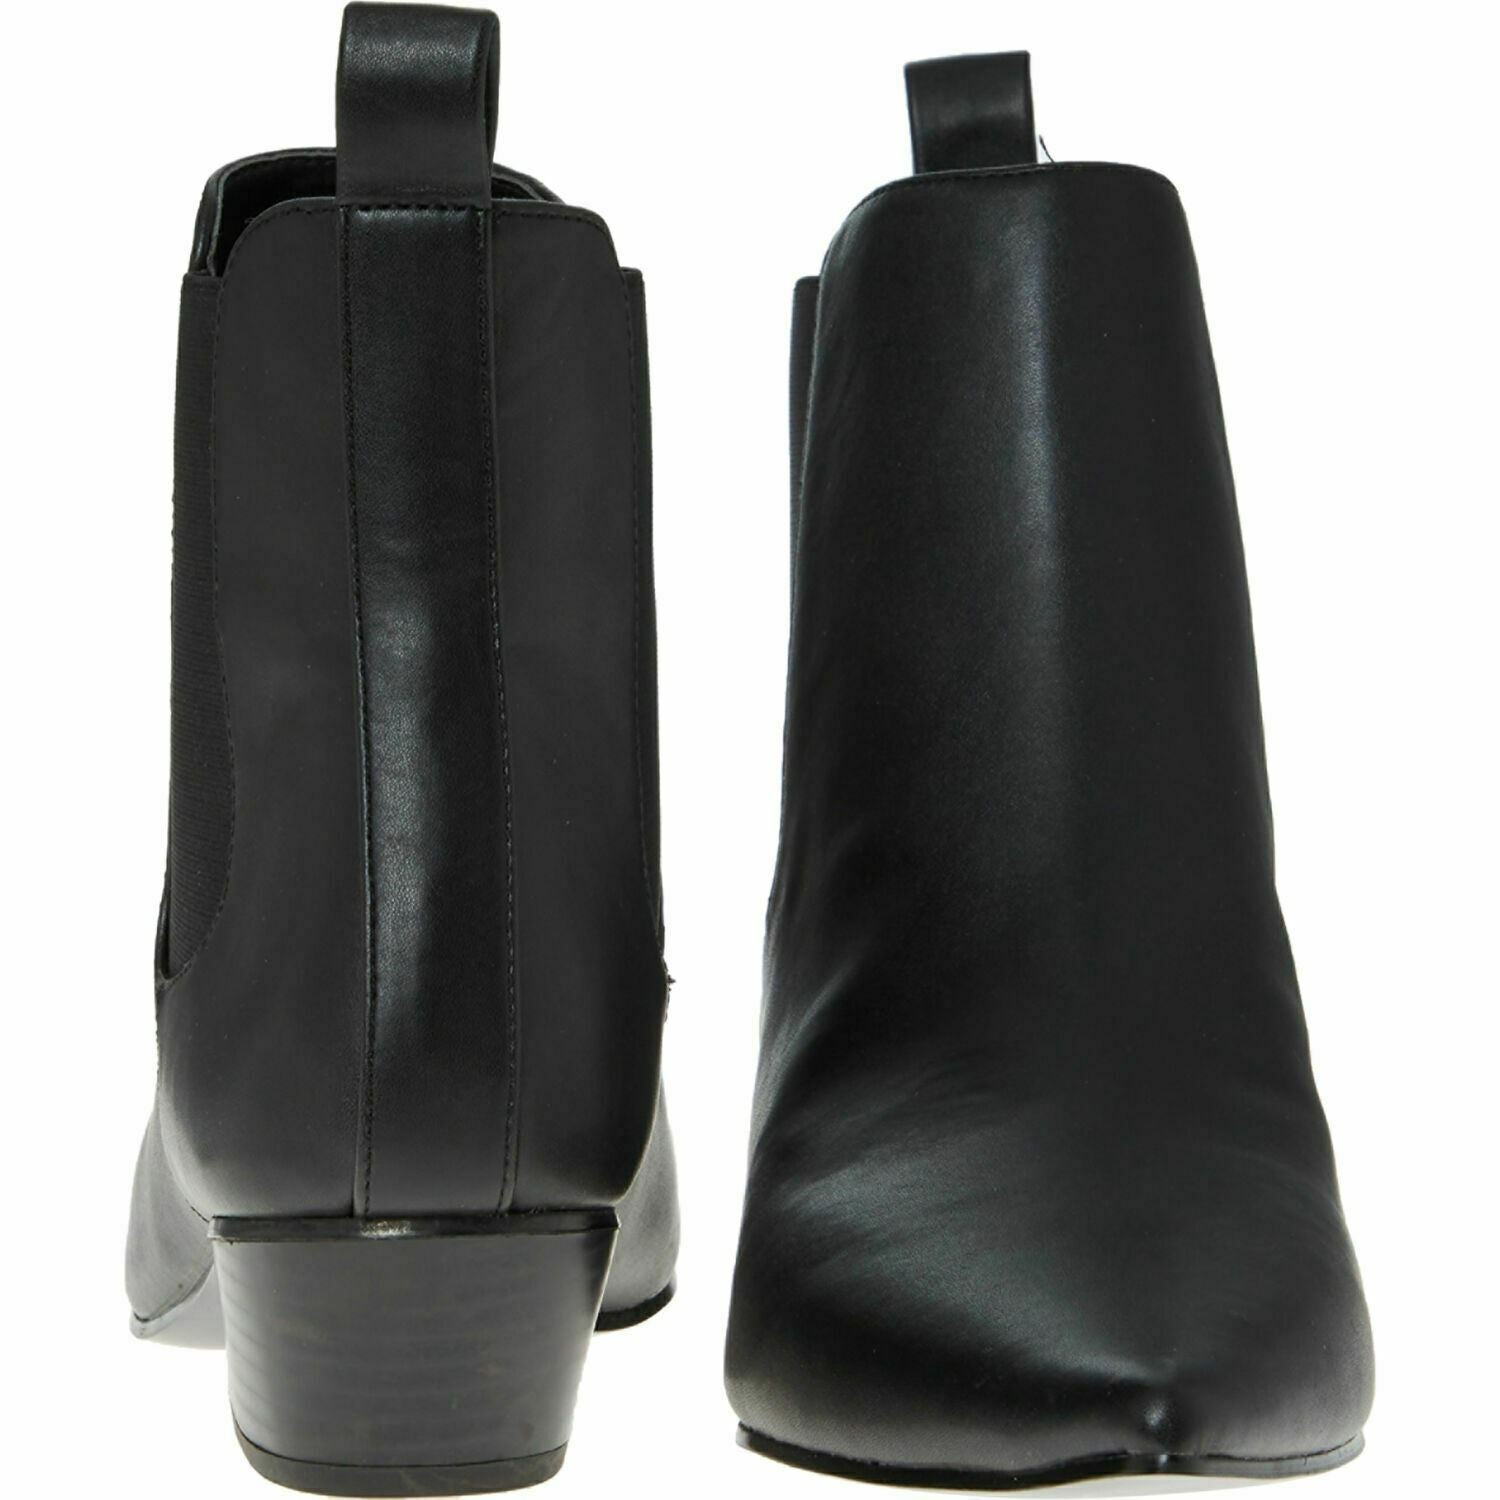 CALVIN KLEIN Women's PAOLA Black Faux Leather Chelsea Boots, UK 6 / EU 39